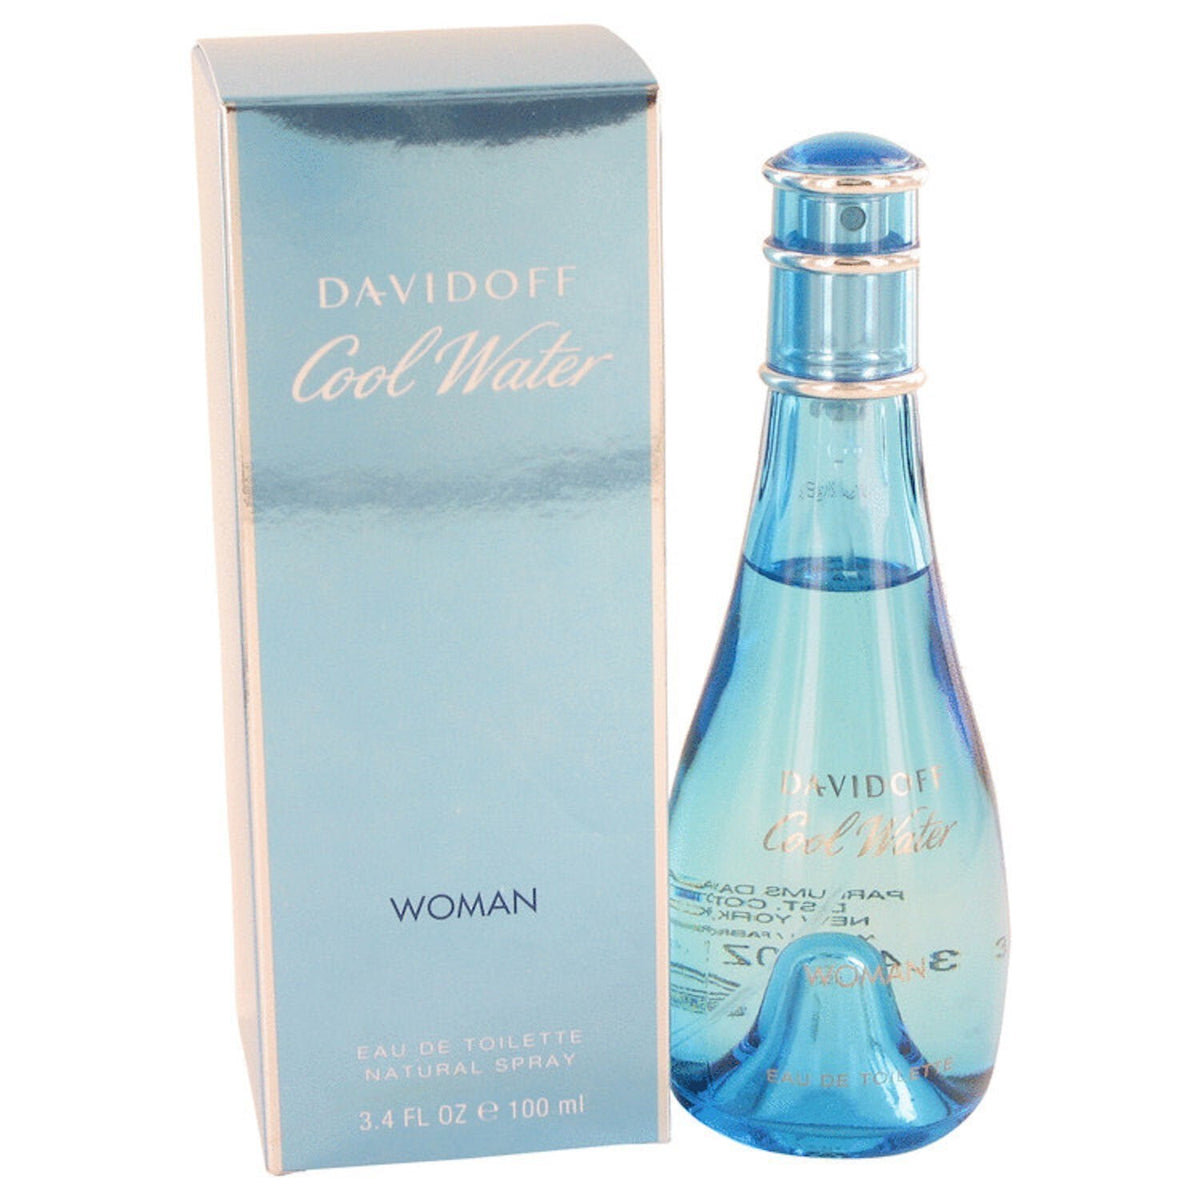 Davidoff Cool Water Women EDT 100 ml - Makeup MSash PakiMSan - Davidoff